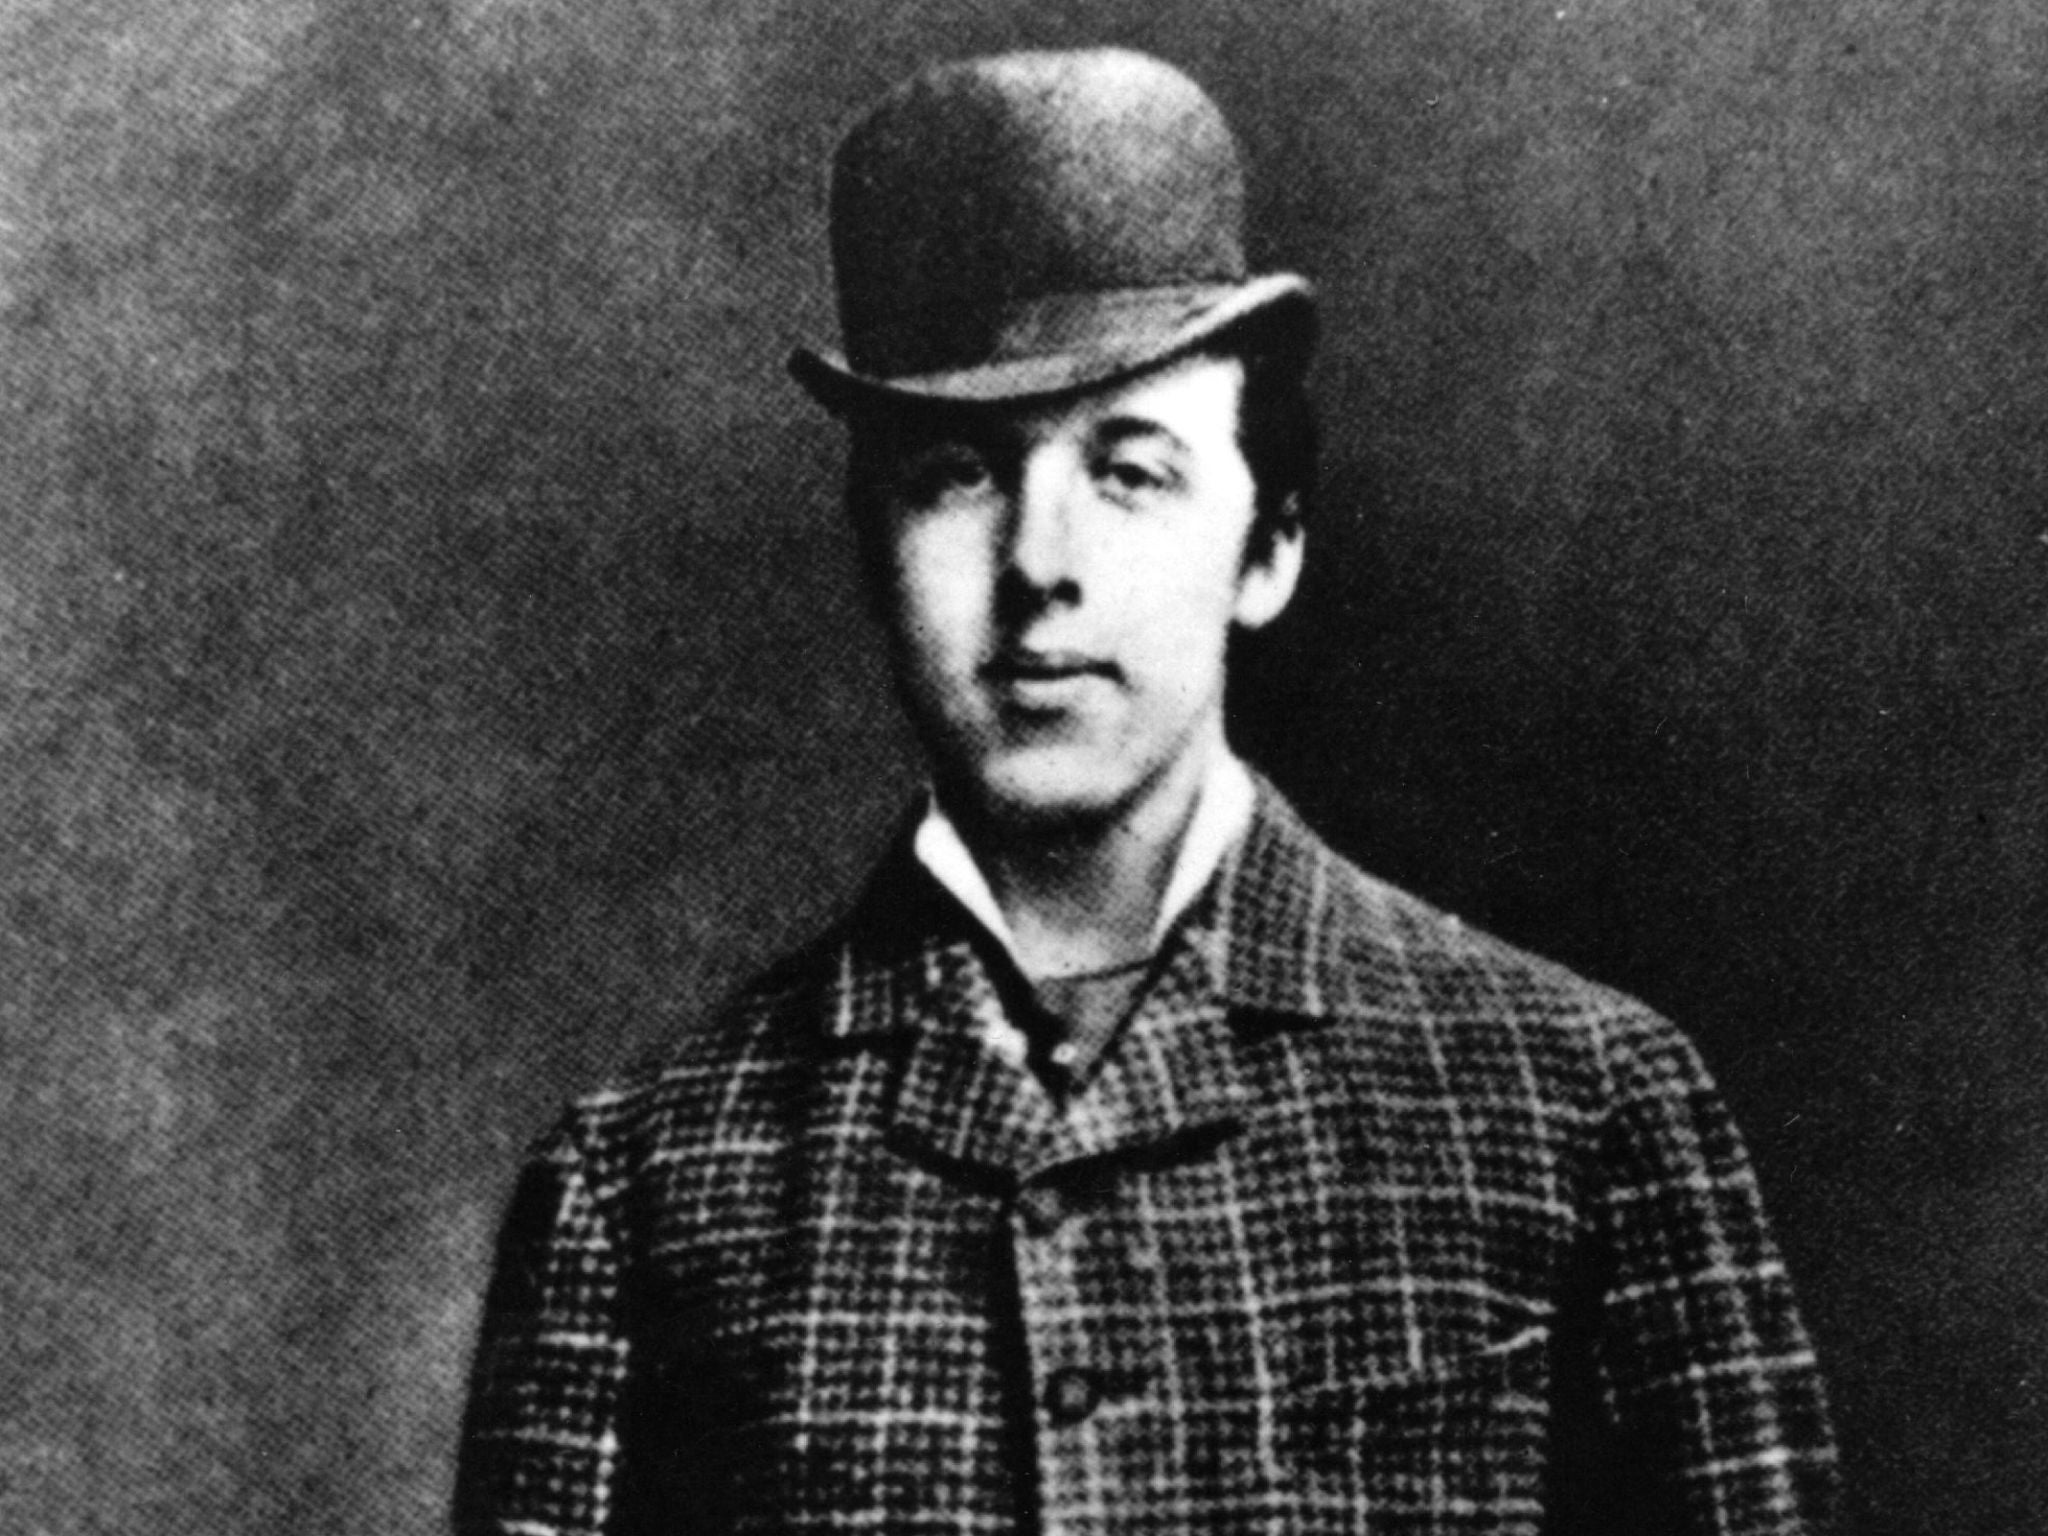 Oscar Wilde was born on 16 October 1854